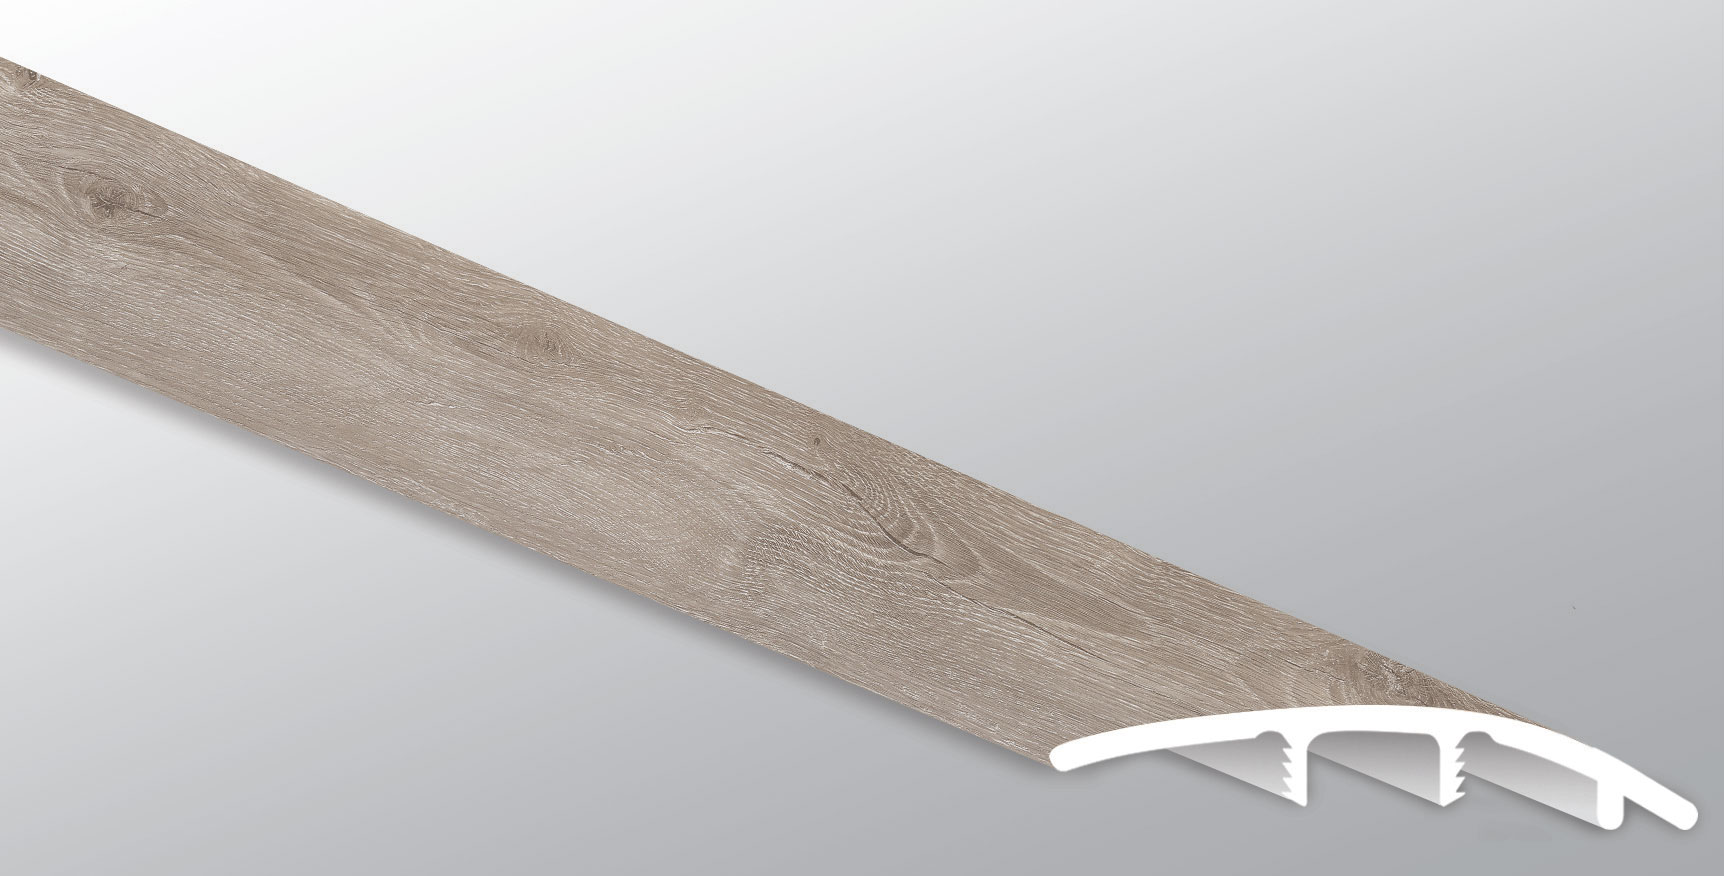 Twilight Luxury Vinyl Plank Flooring - Modern and Versatile